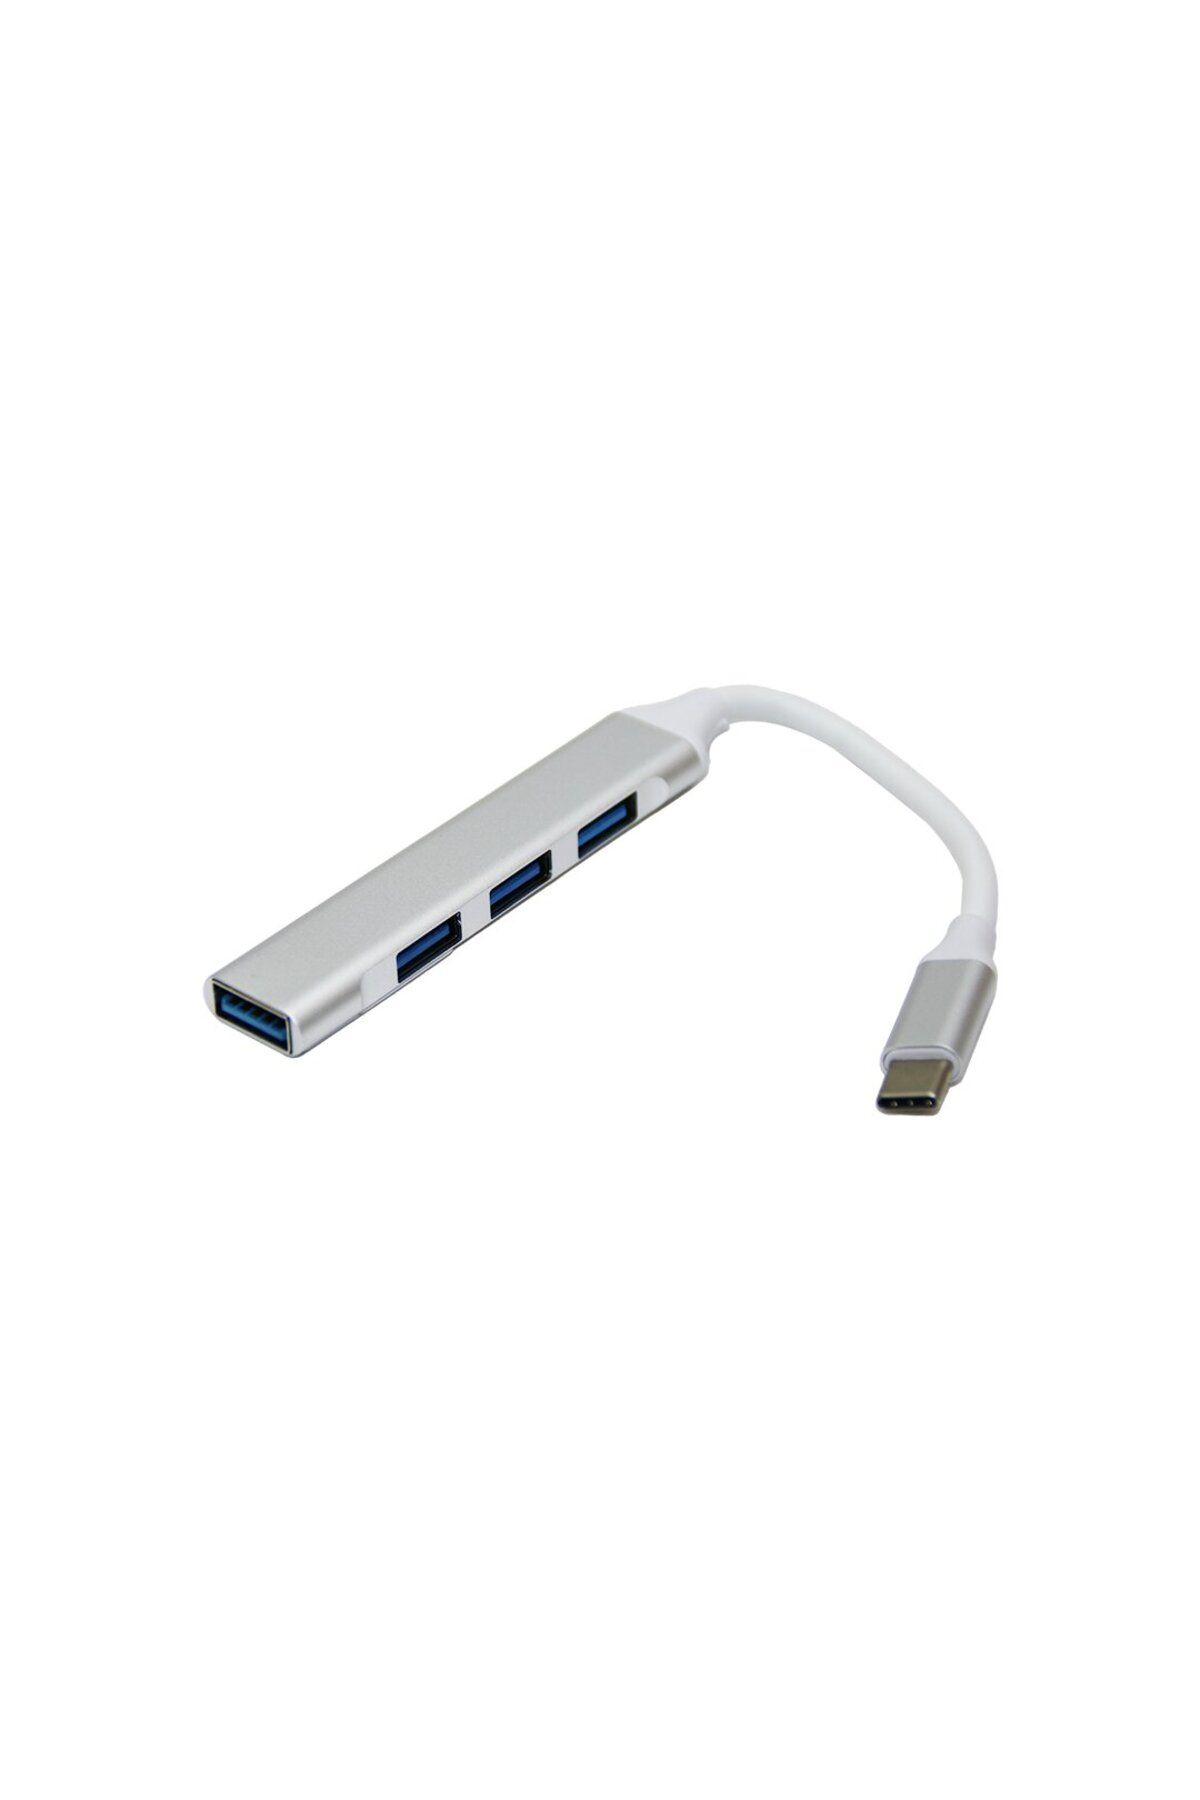 KAYAMU USB TO TYPC-E ÇOĞALTICI 4PORT (K203)